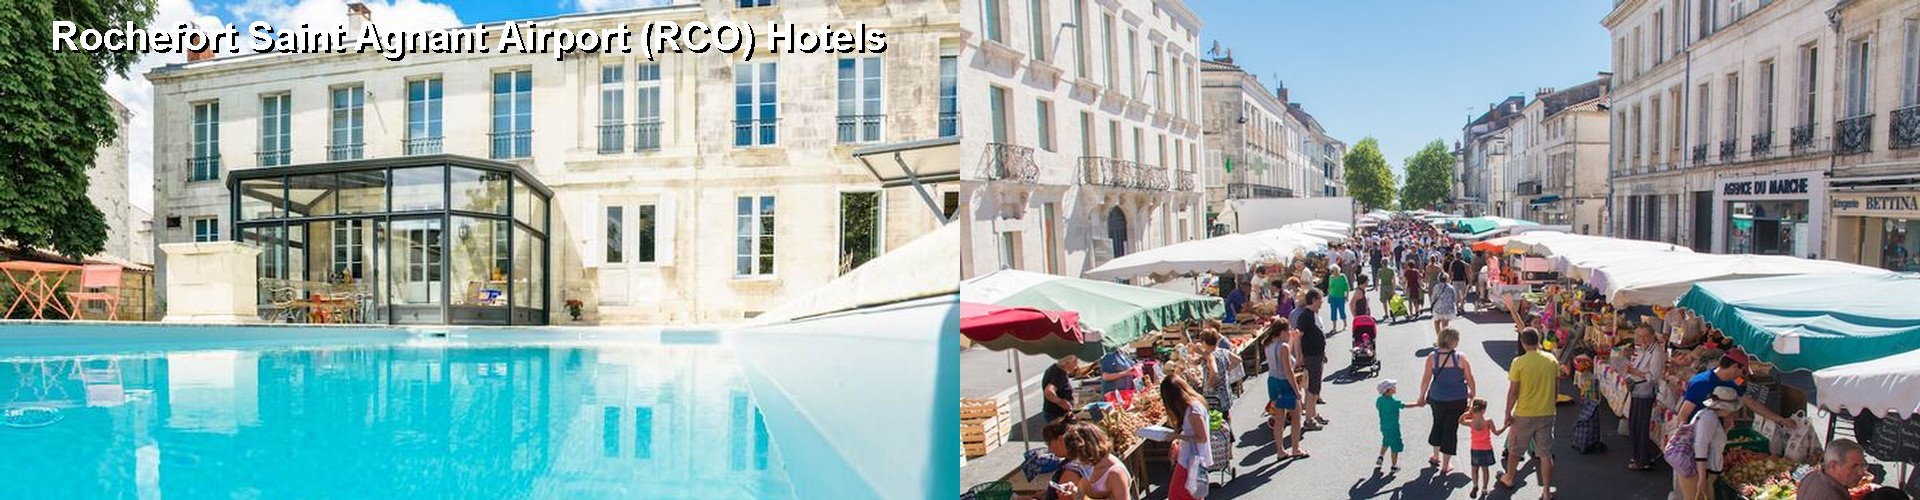 5 Best Hotels near Rochefort Saint Agnant Airport (RCO)